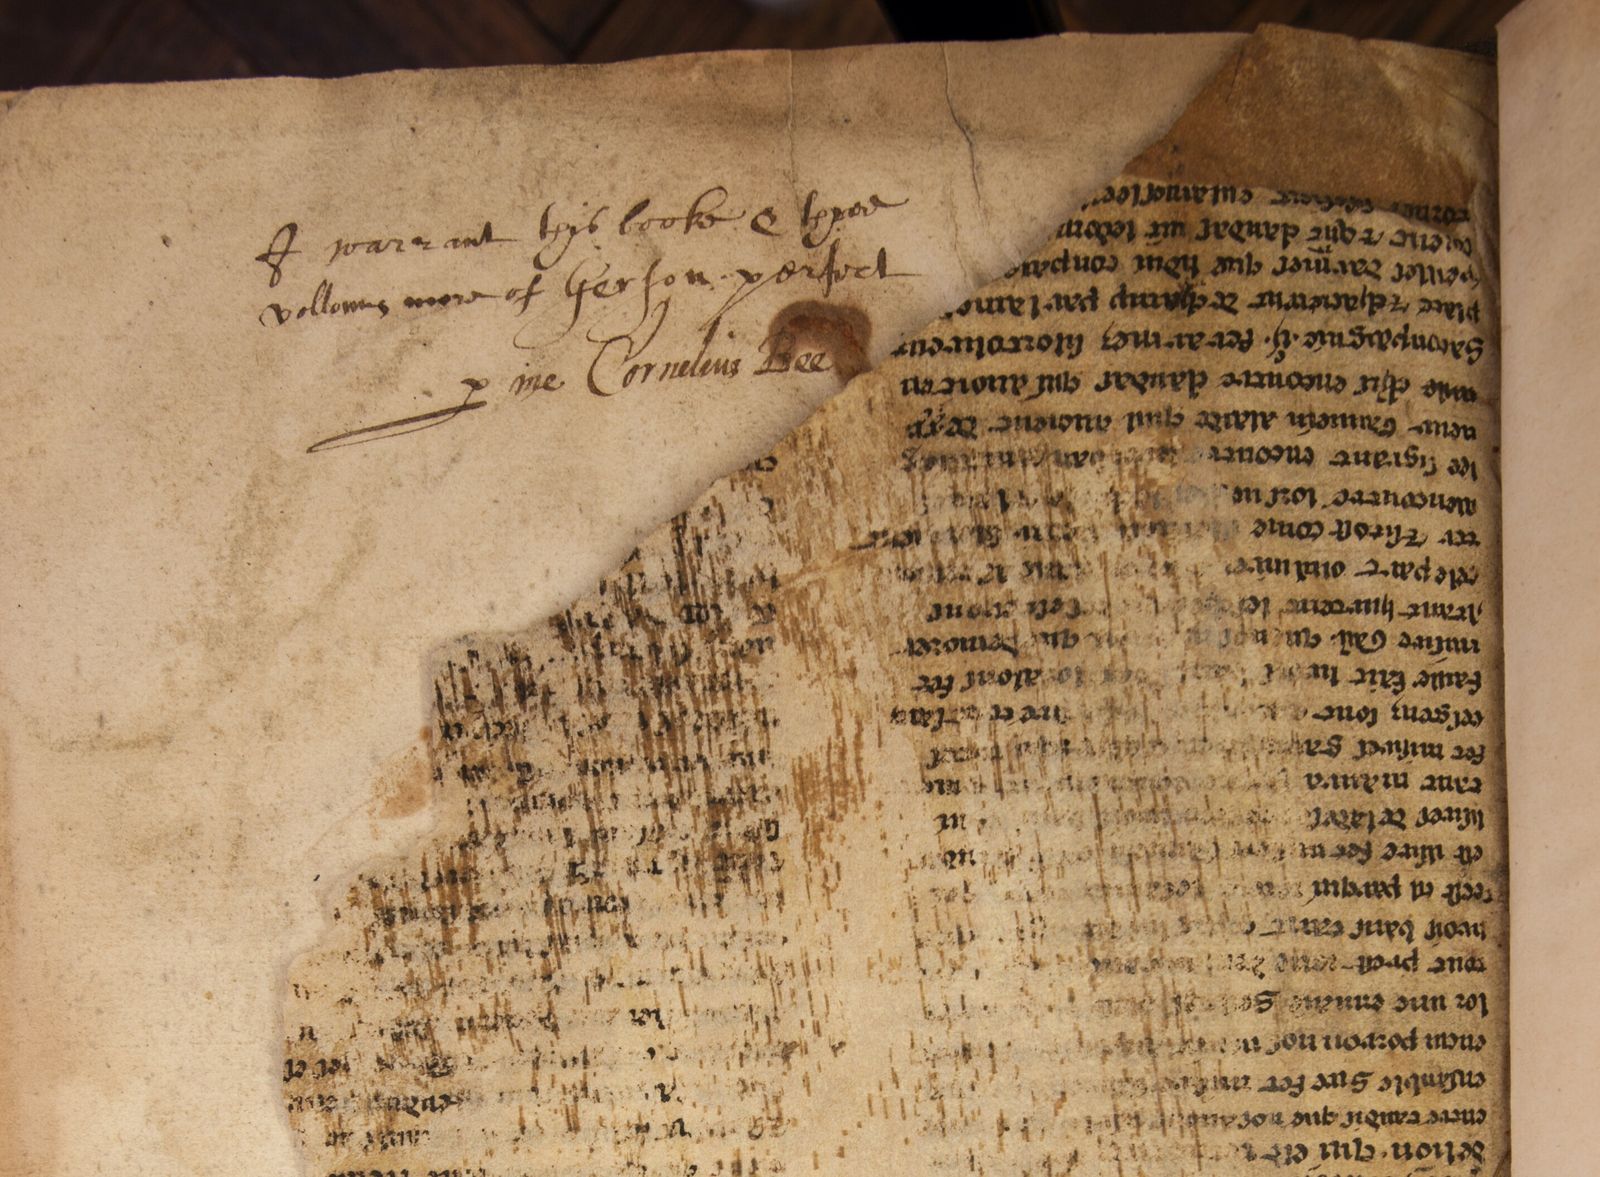 Rediscovered Medieval Manuscript Offers New Twist on Arthurian Legend, Smart News